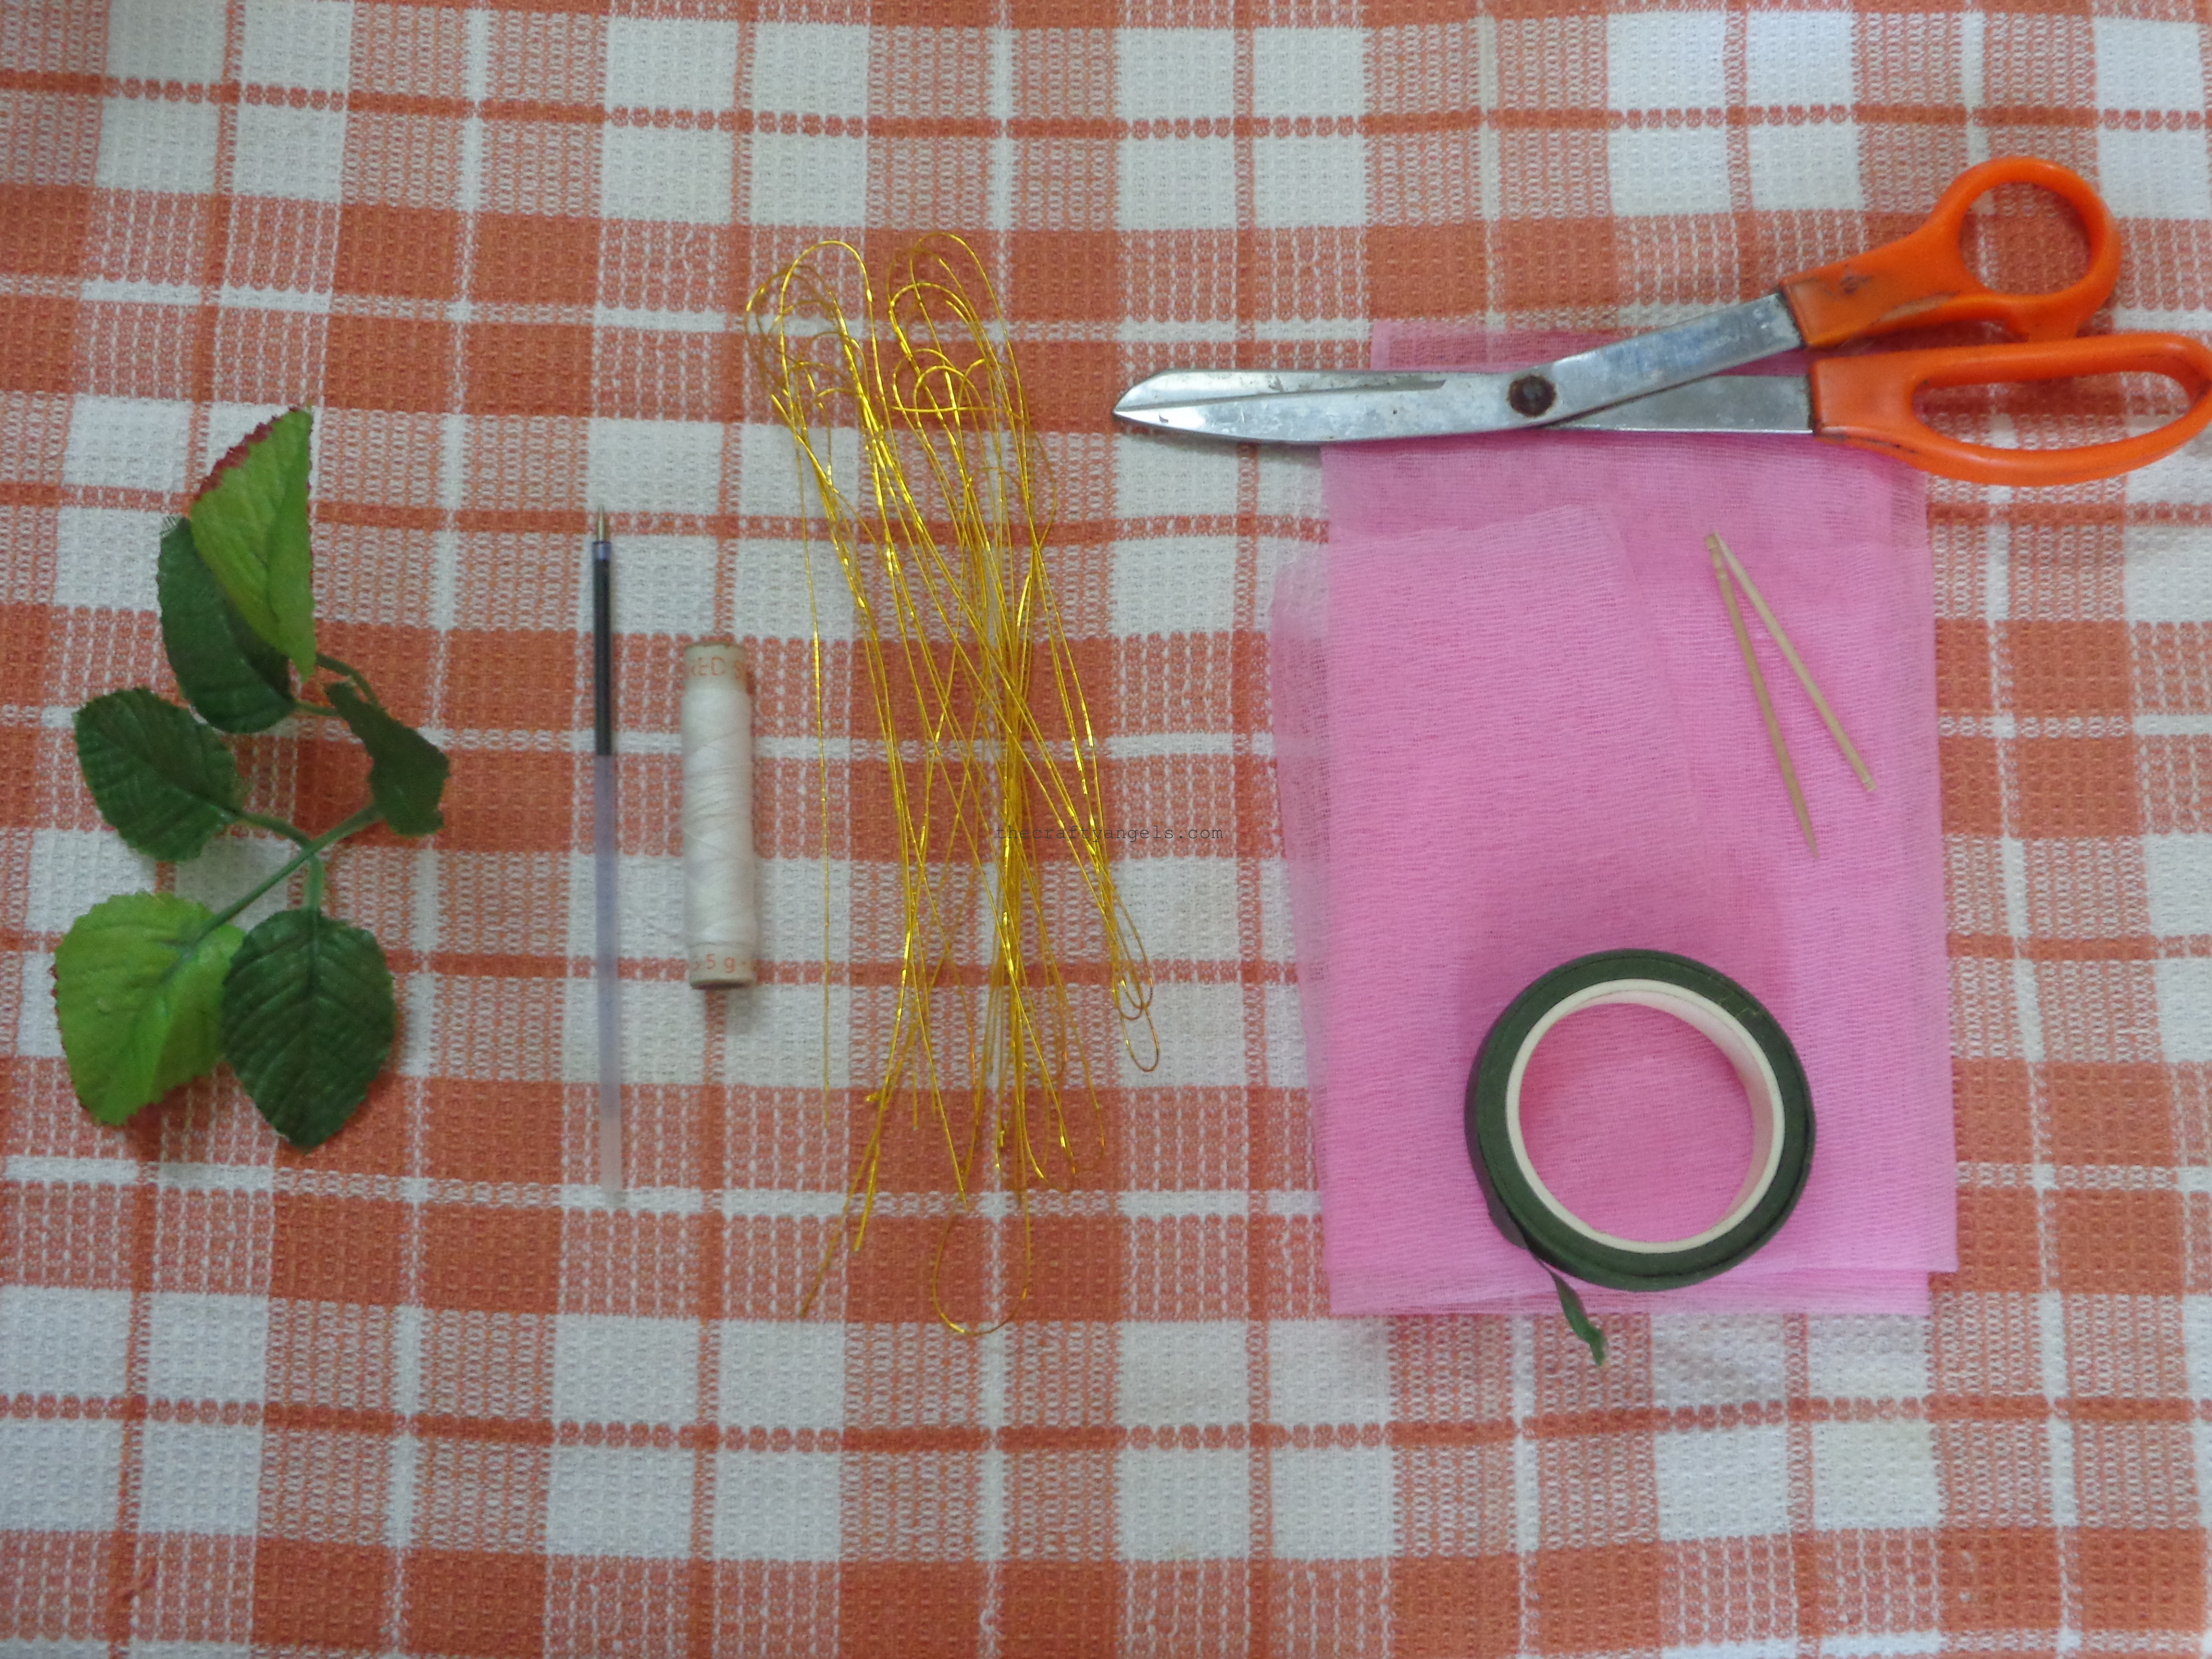 Organdy Rose Flower making DIY Tutorial #1 - The Crafty Angels